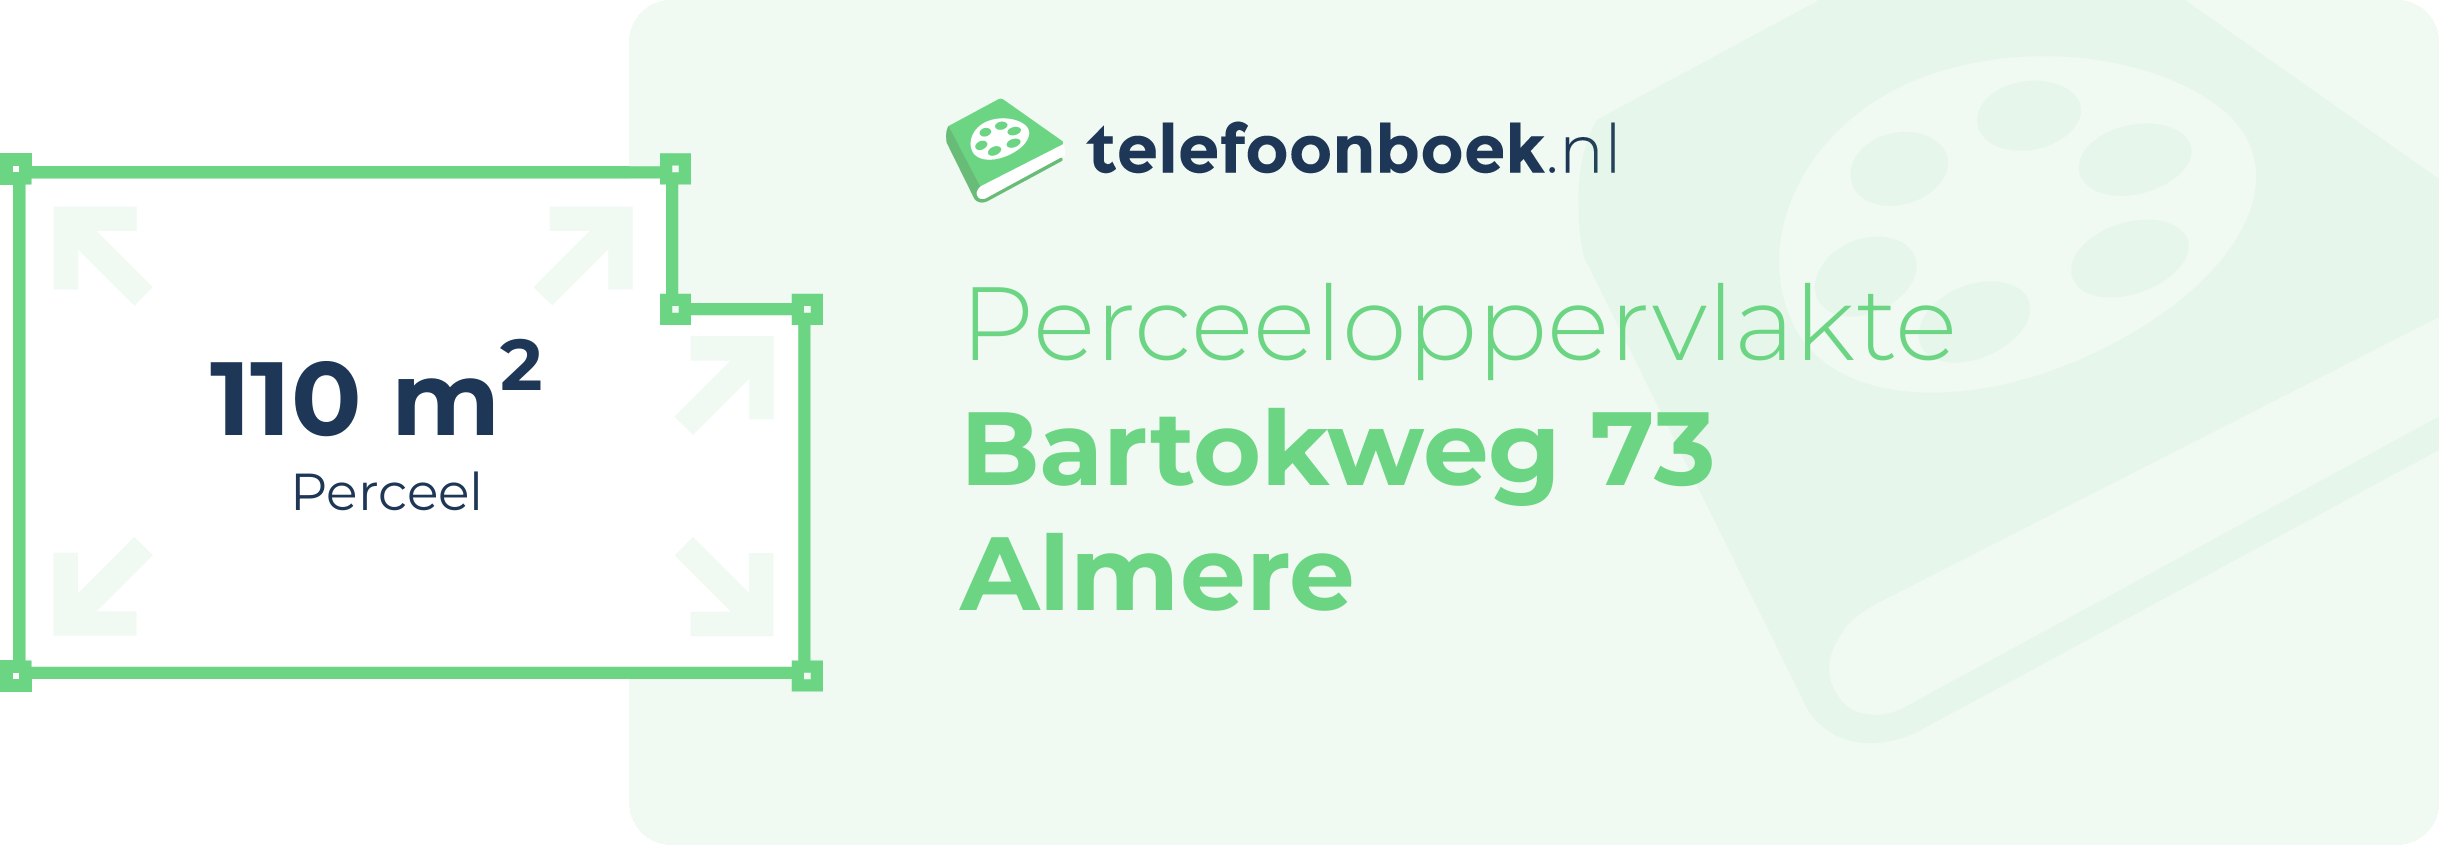 Perceeloppervlakte Bartokweg 73 Almere